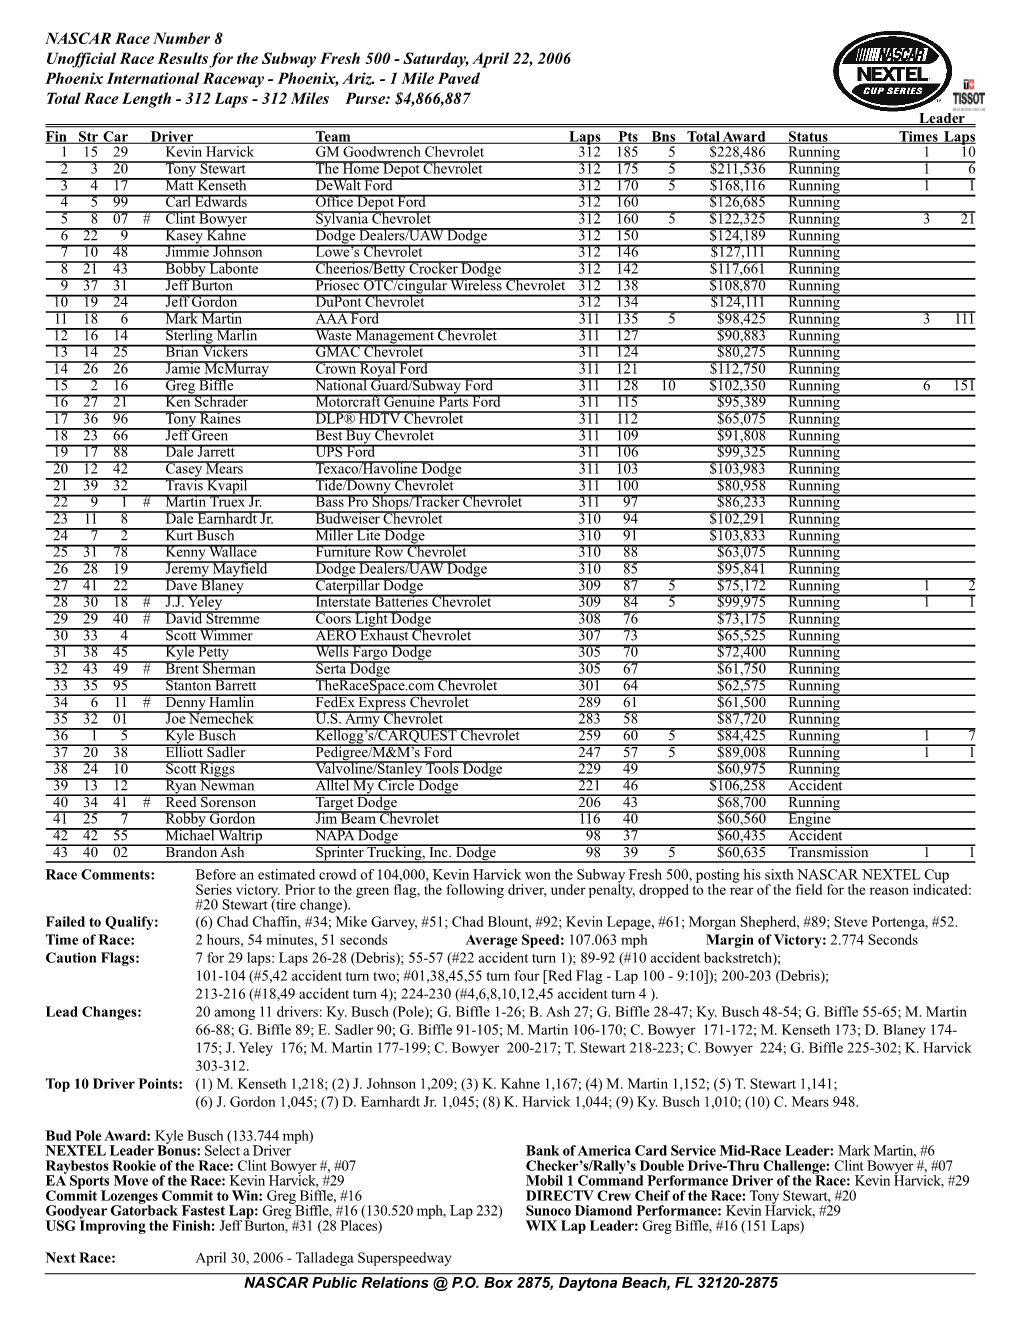 NASCAR Race Number 8 Unofficial Race Results for the Subway Fresh 500 - Saturday, April 22, 2006 Phoenix International Raceway - Phoenix, Ariz